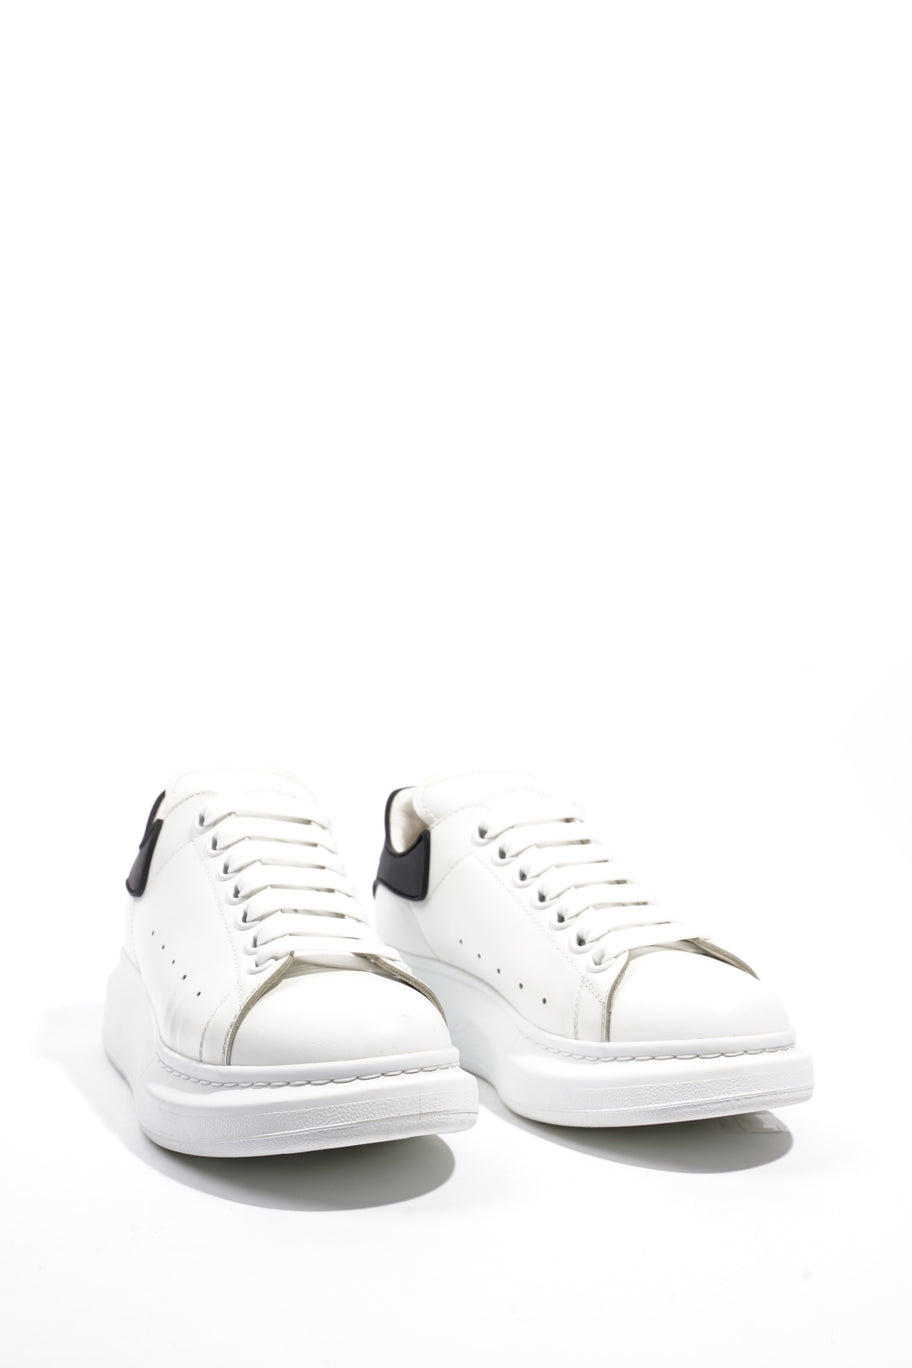 Oversized Sneaker White / Black Tab Leather EU 38 UK 5 Image 2